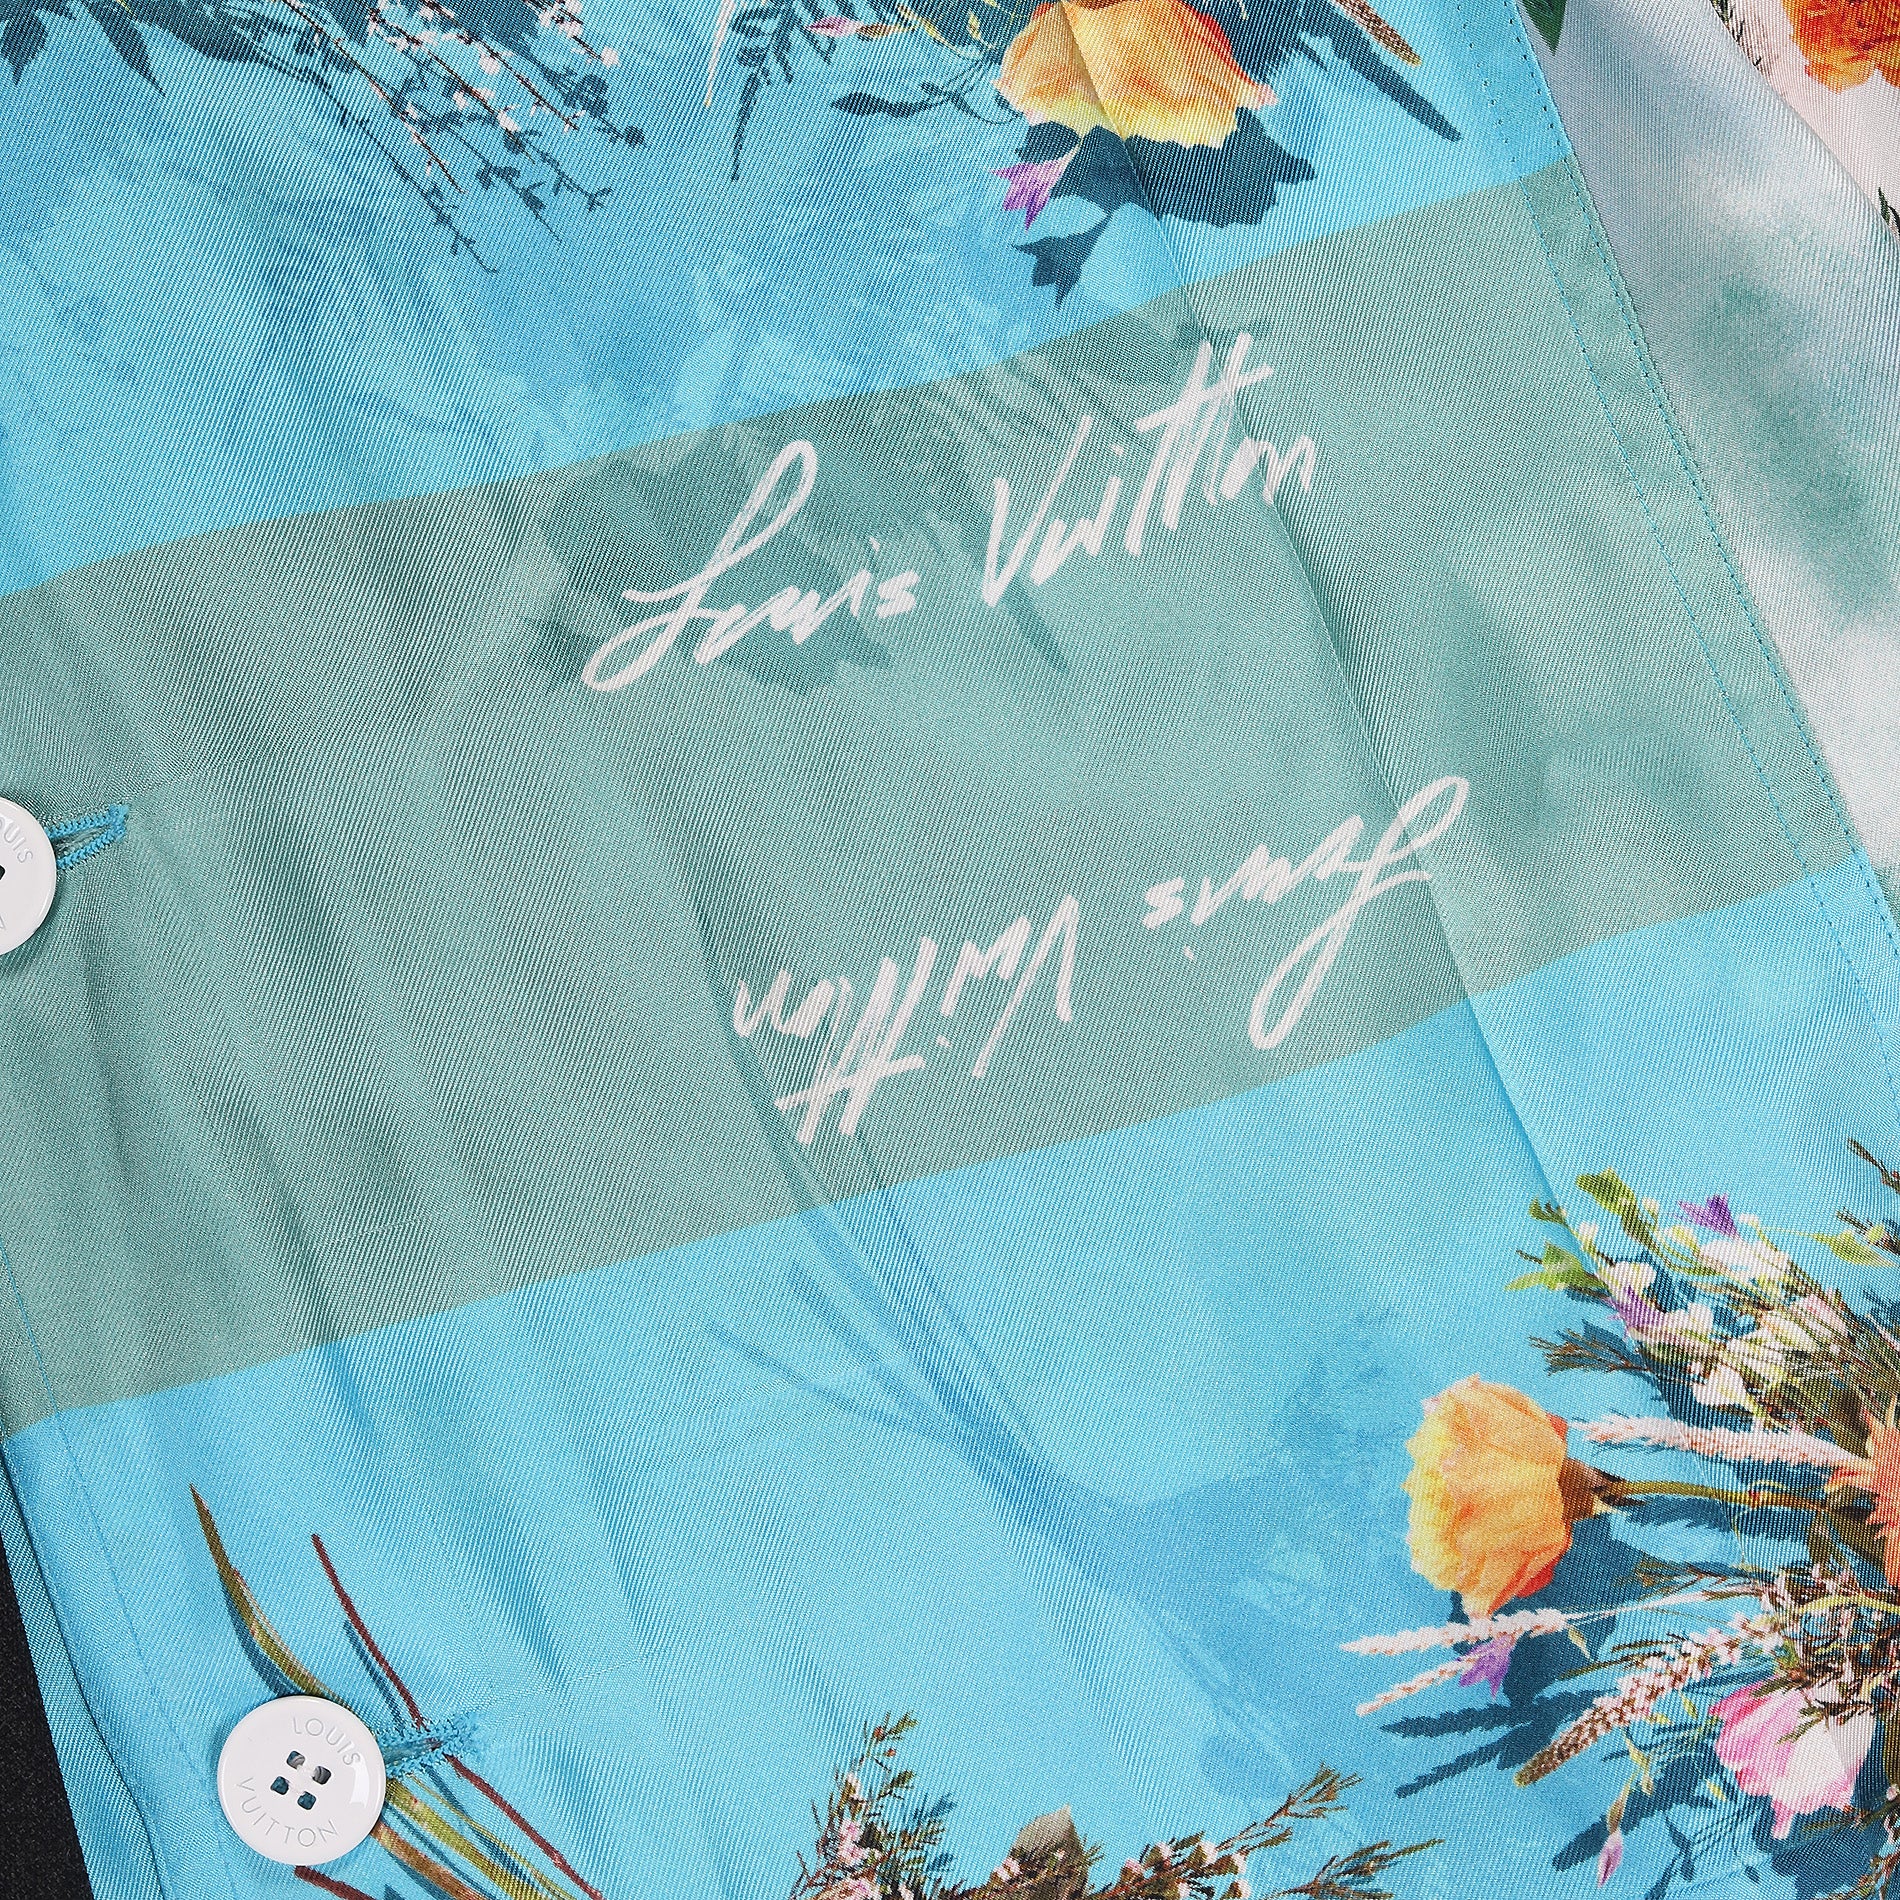 Louis Vuitton on X: #LVMenSS22 Sampling and re-sampling. Looks